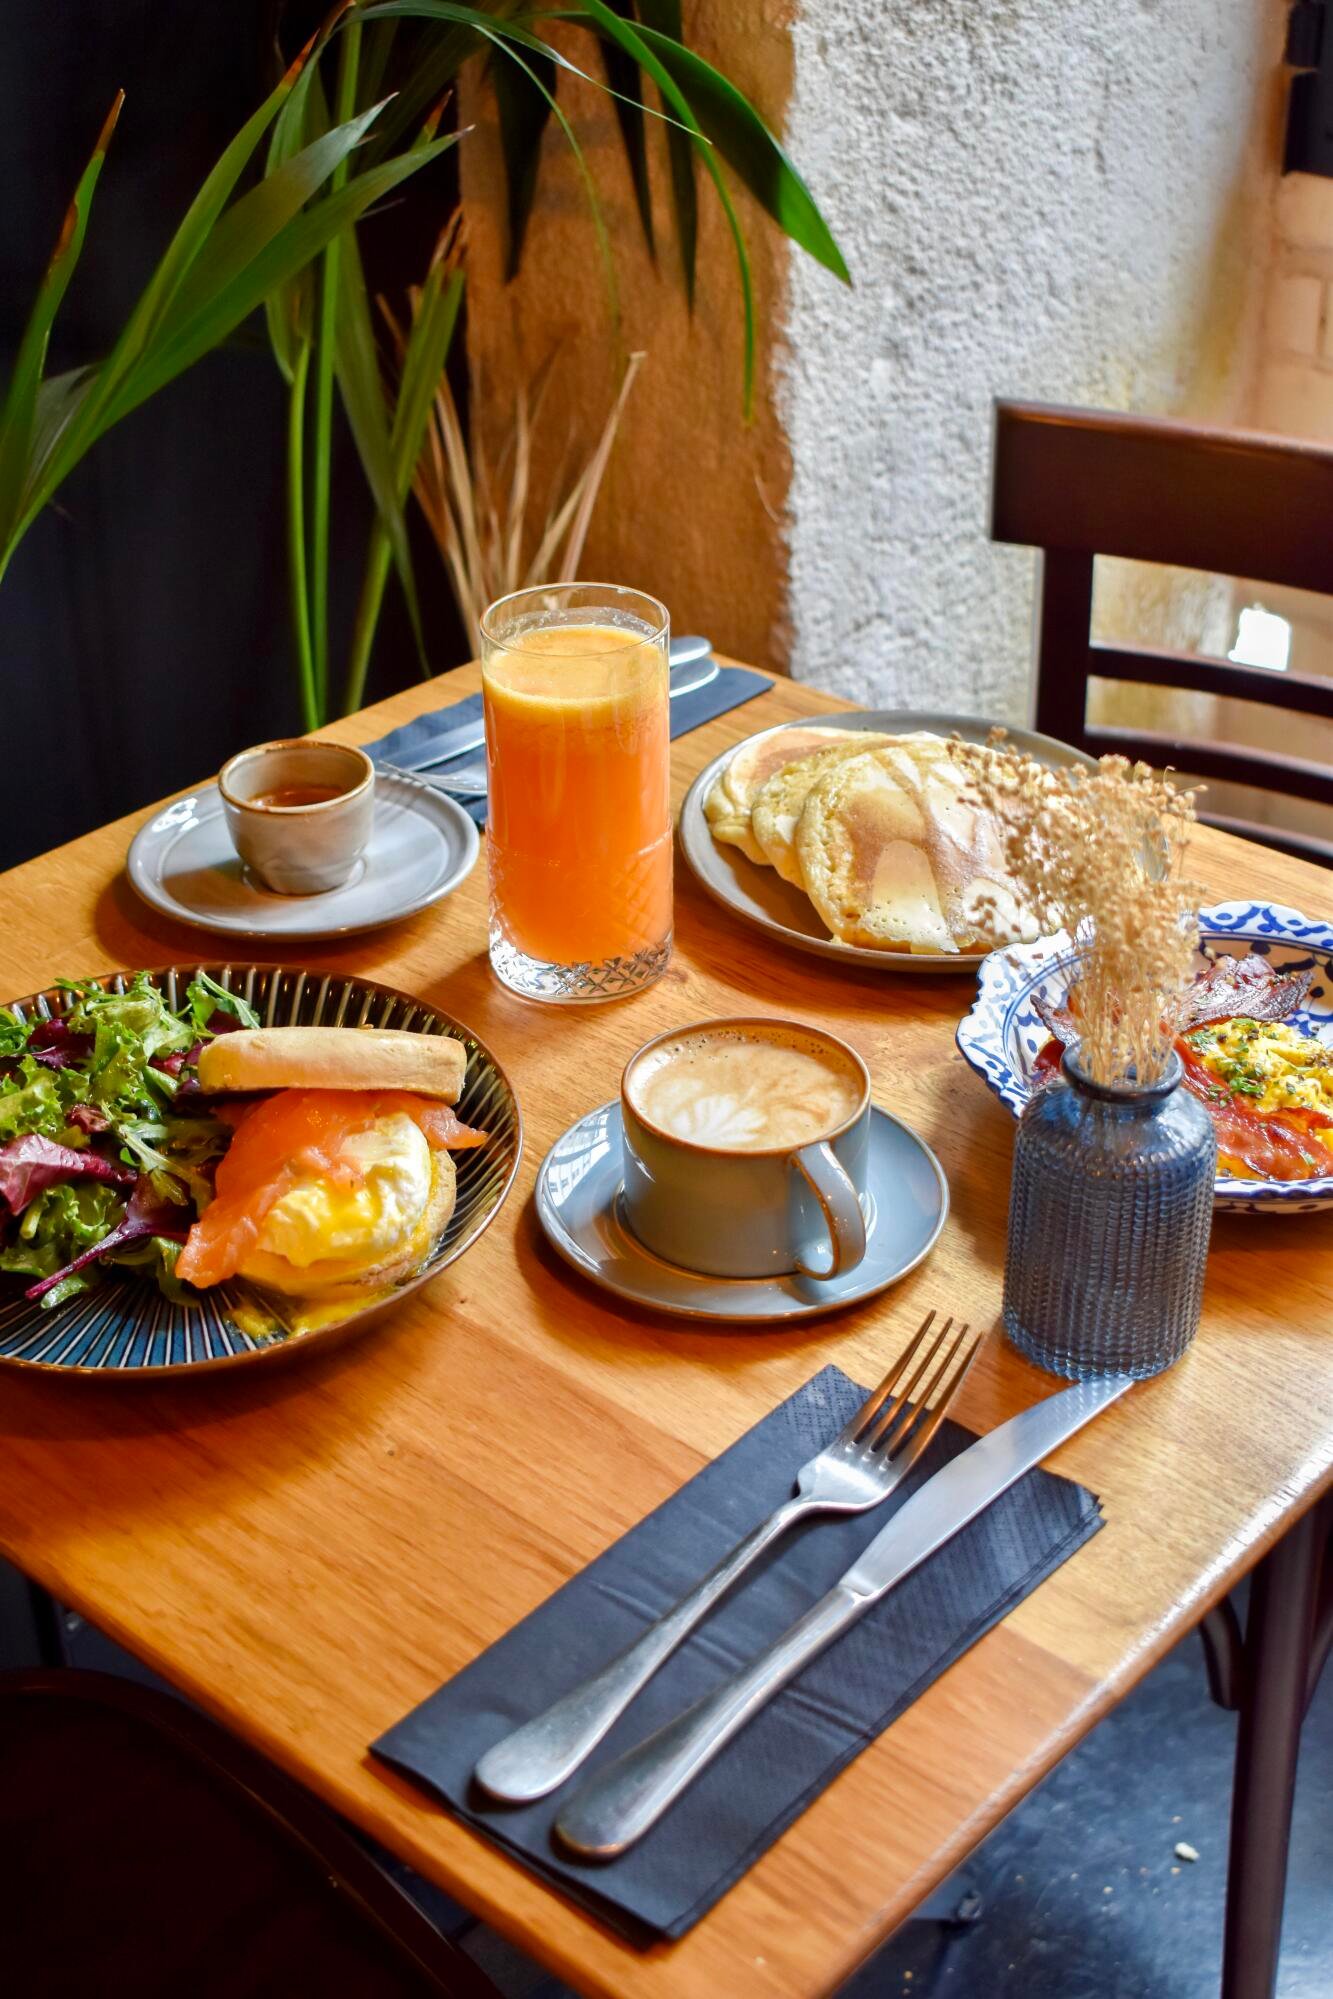 Café Restaurant Creime Food Salad Eggs salmon Pancakes bacon Drink Juice Coffee brunch Breakfast